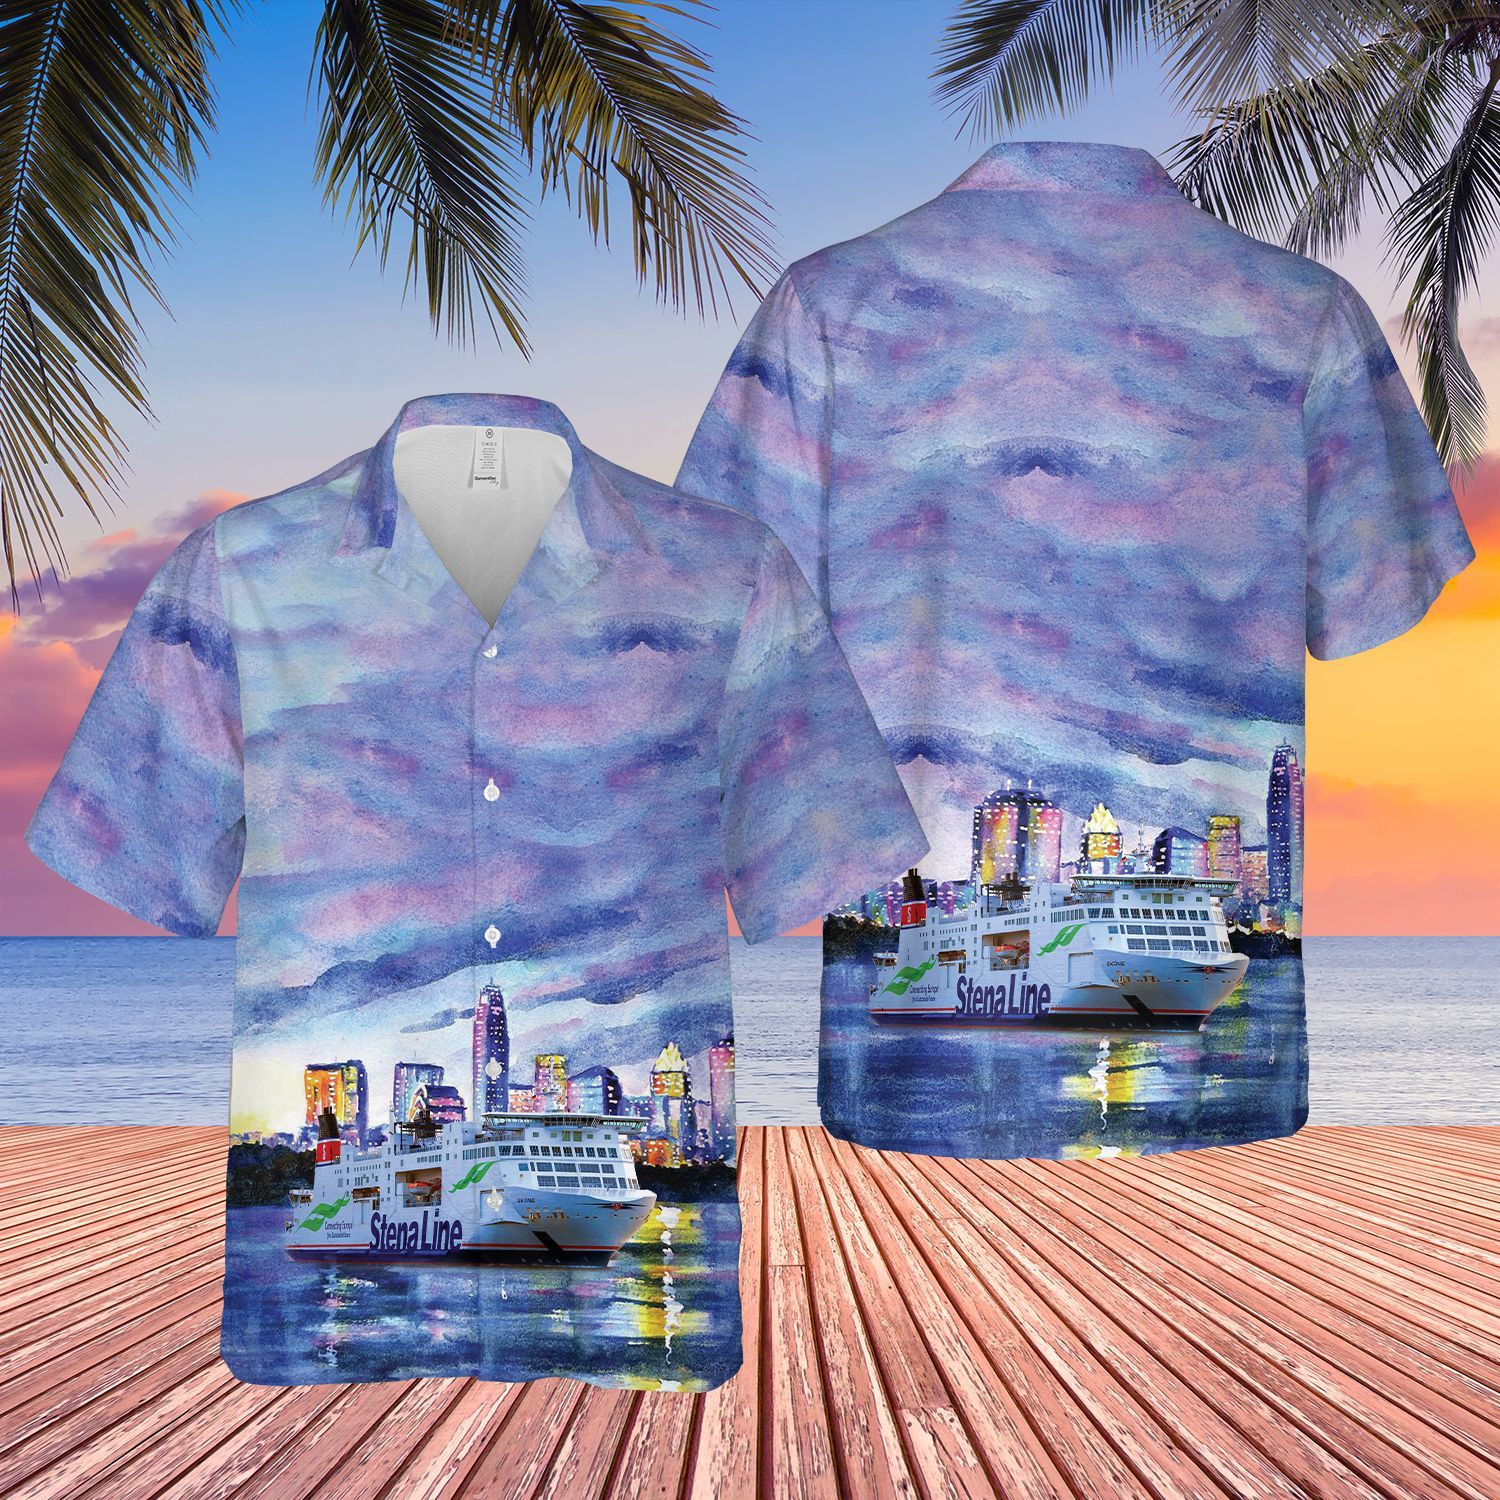 HOT Stena Line Stena Skane All Over Print Tropical Shirt2